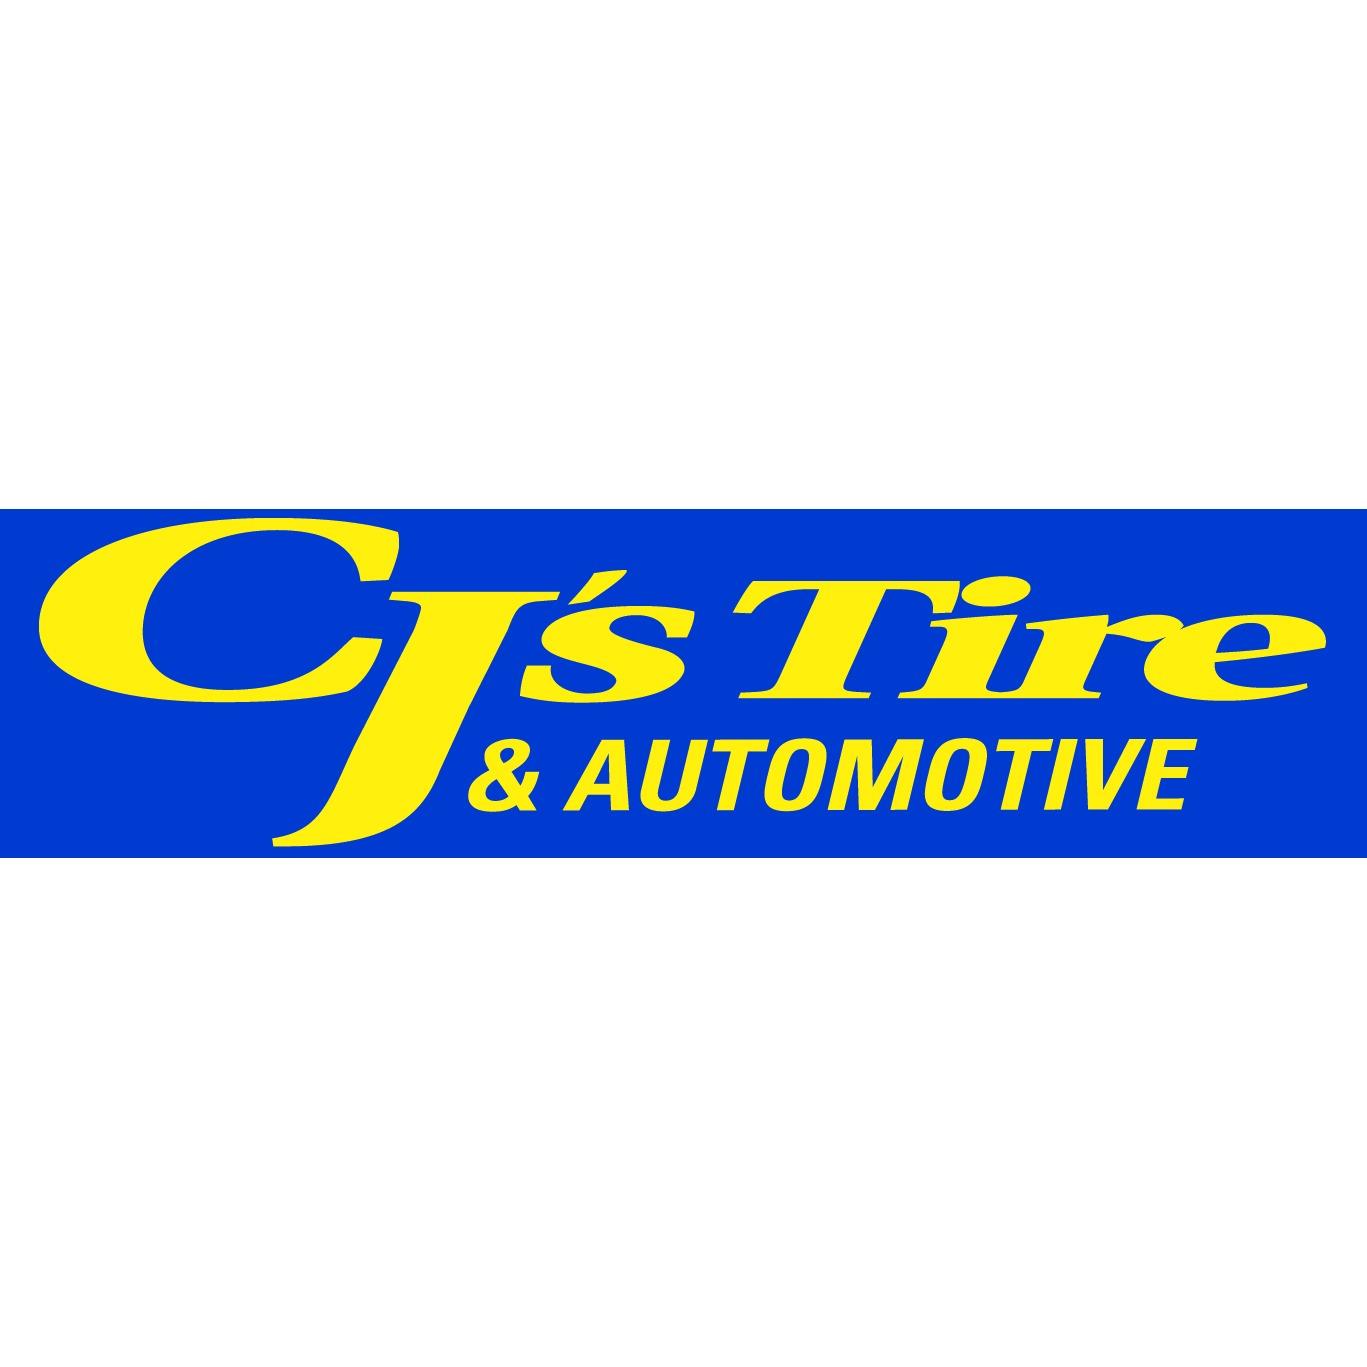 CJ's Tires & Automotive Birdsboro (610)582-4266